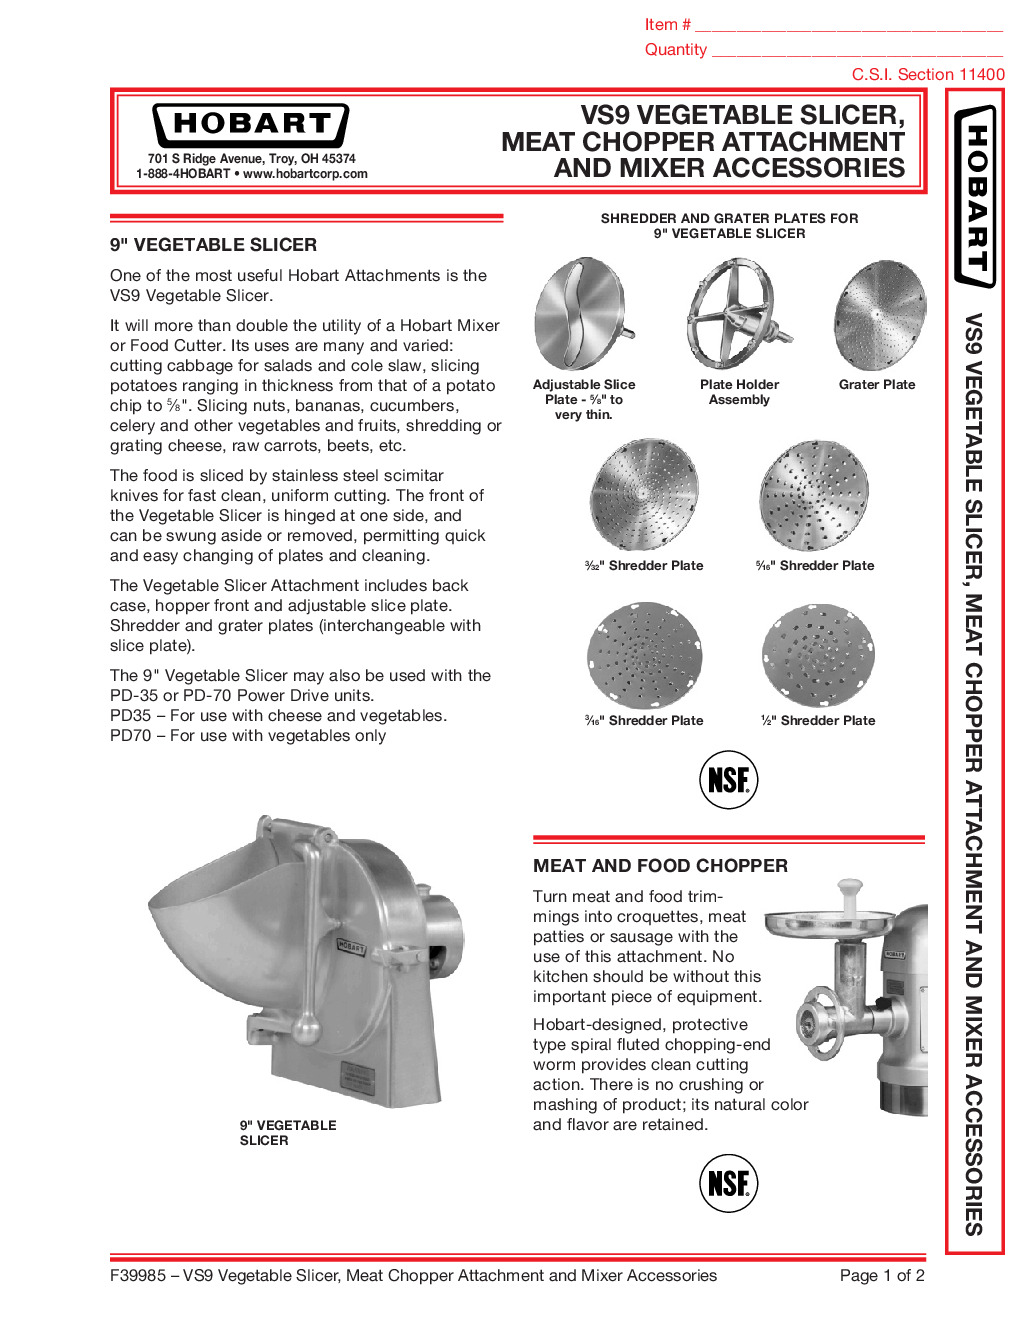 Hobart VS9-12 Vegetable Cutter Attachment, 9” Vegetable Slicer for #12 Attachment Hub; Includes Back Case